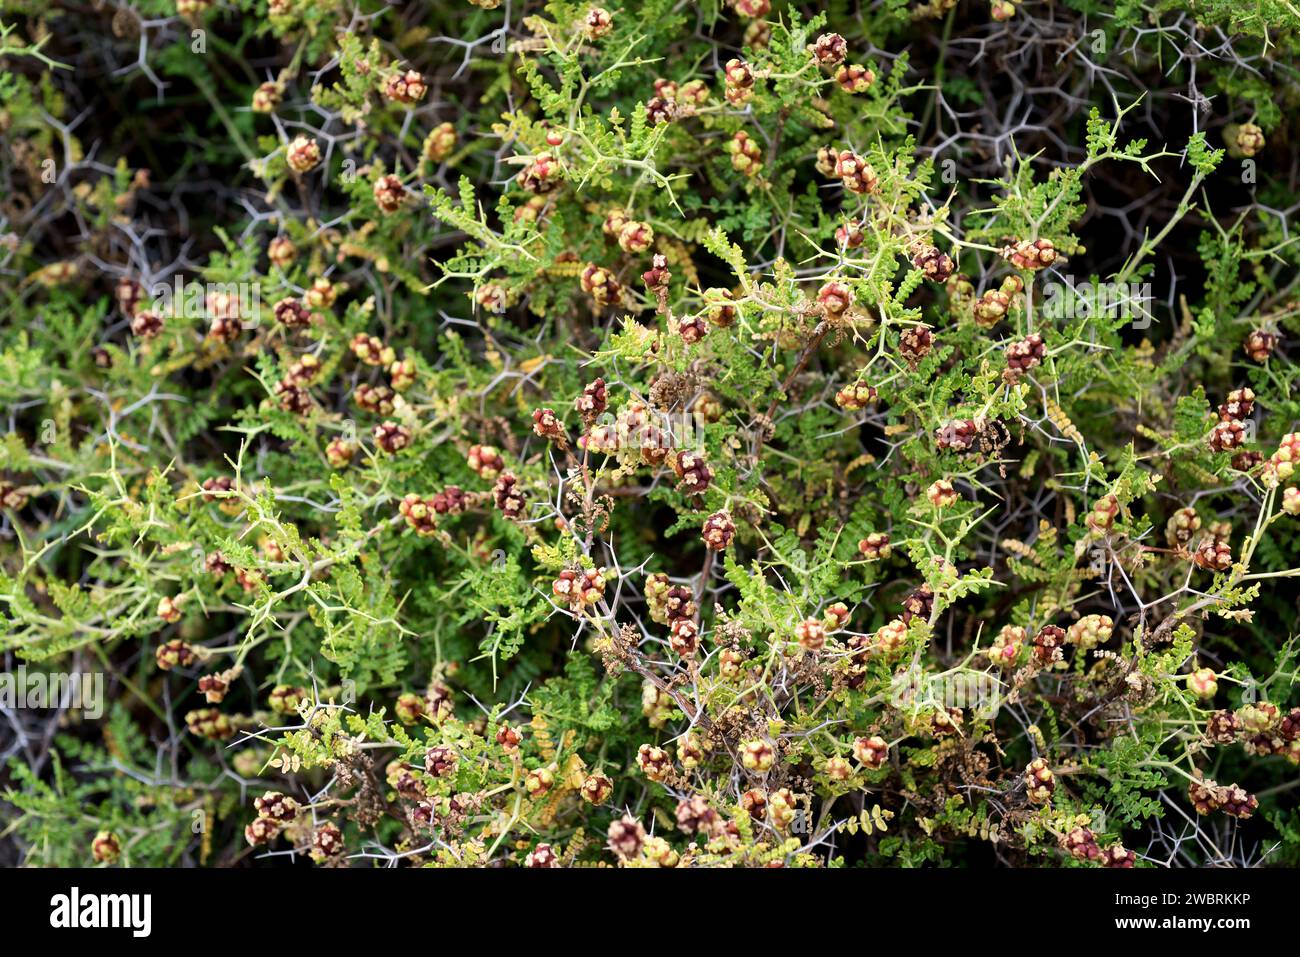 Thorny burnet (Sarcopoterium spinosum) is a thorny shrub native to eastern Mediterranean Basin. Stock Photo